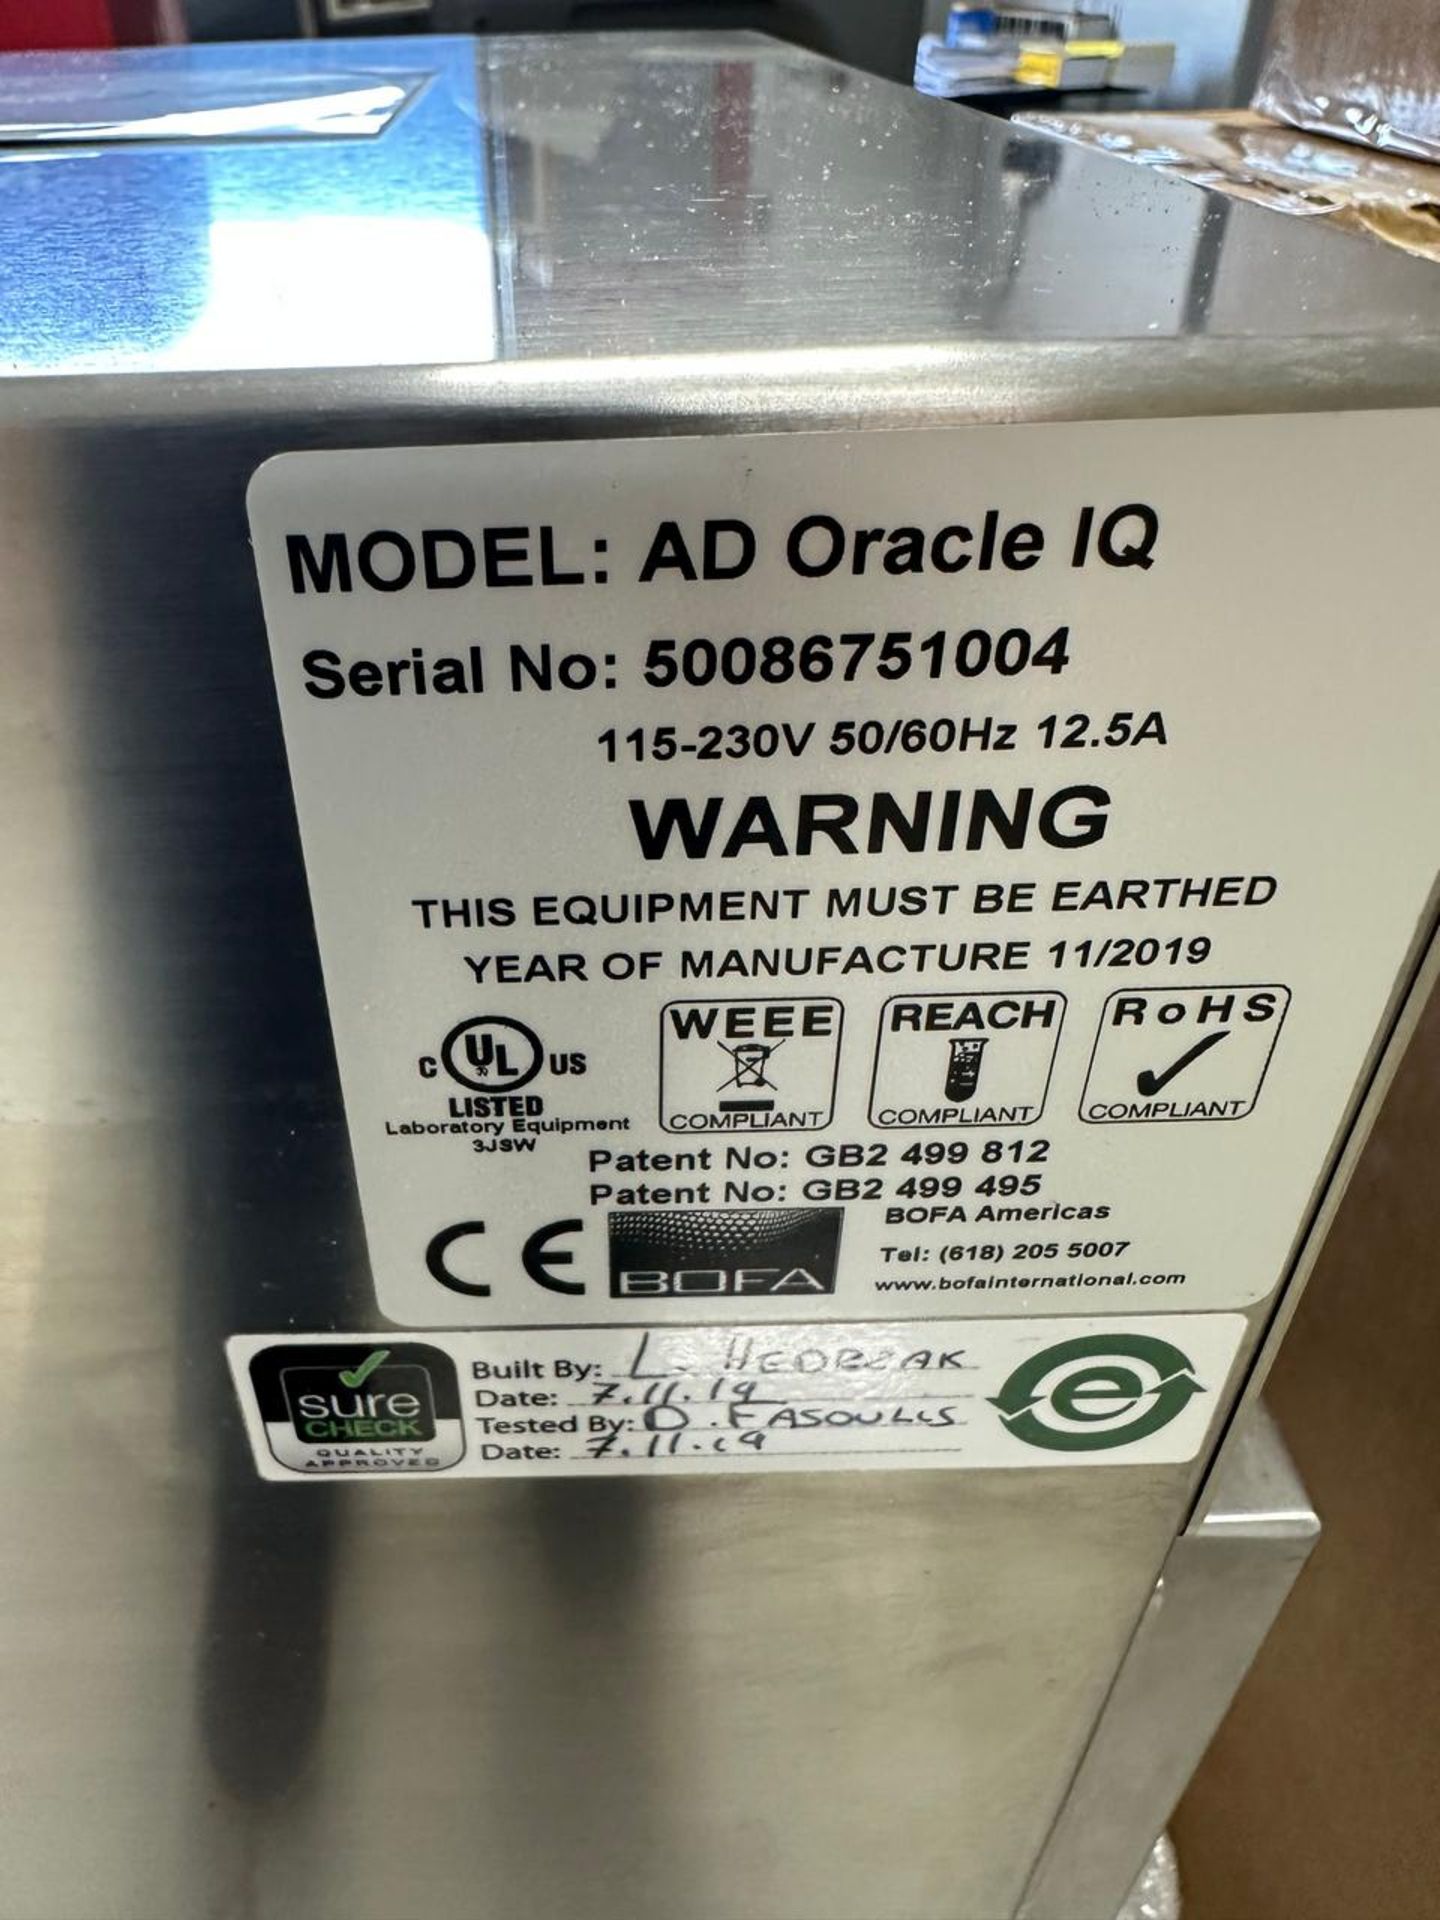 2019 BOFA AD Oracle IQ Fume Extractor - Image 4 of 5